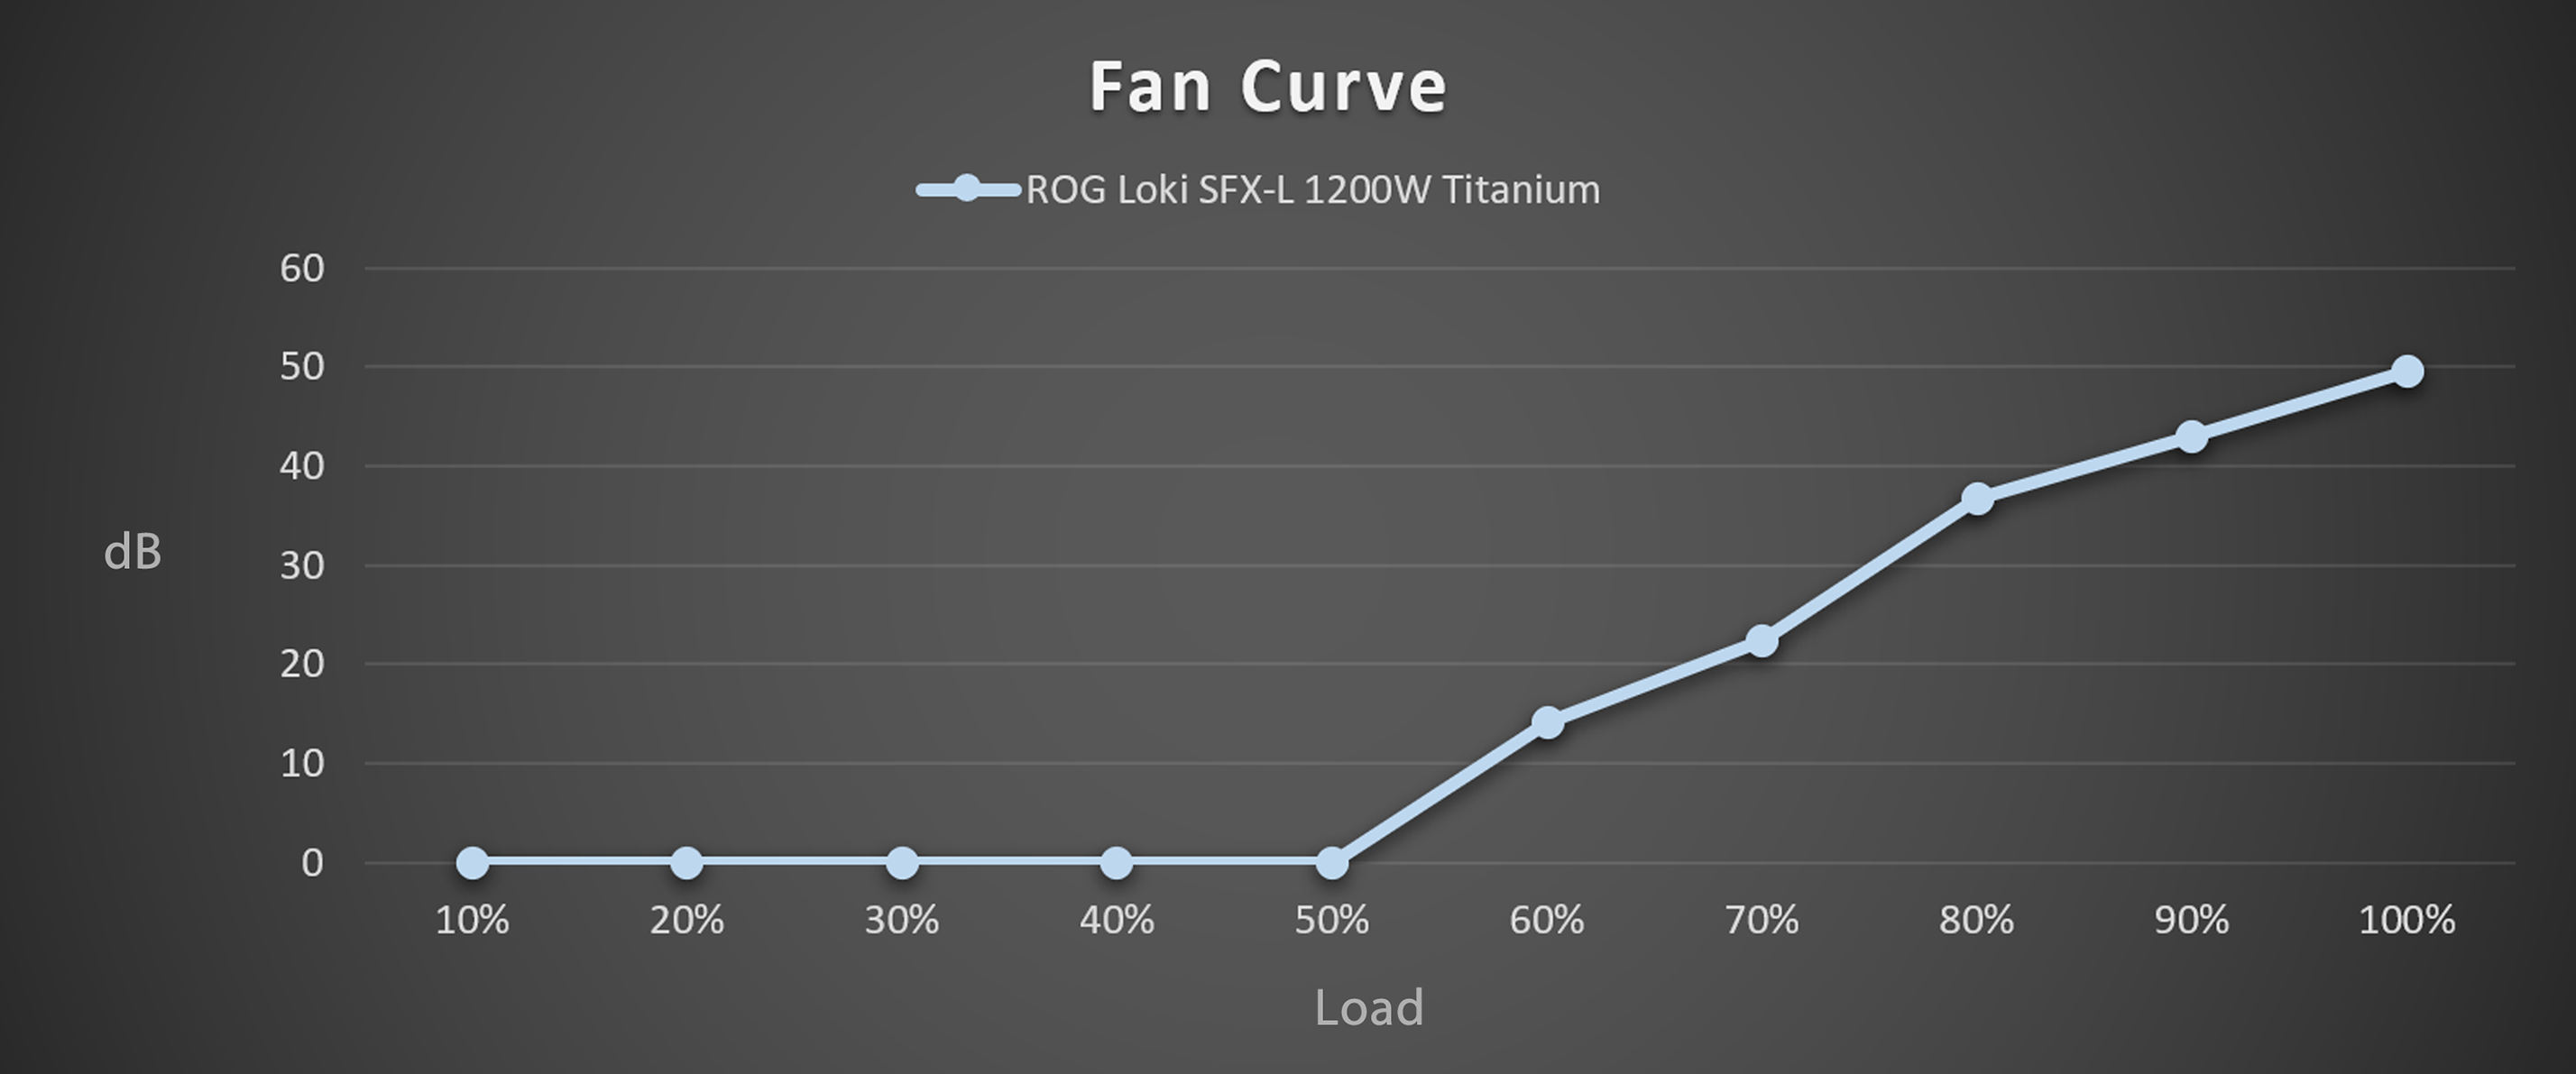 Fan noise curve of ROG Loki SFX-L 1200W Titanium